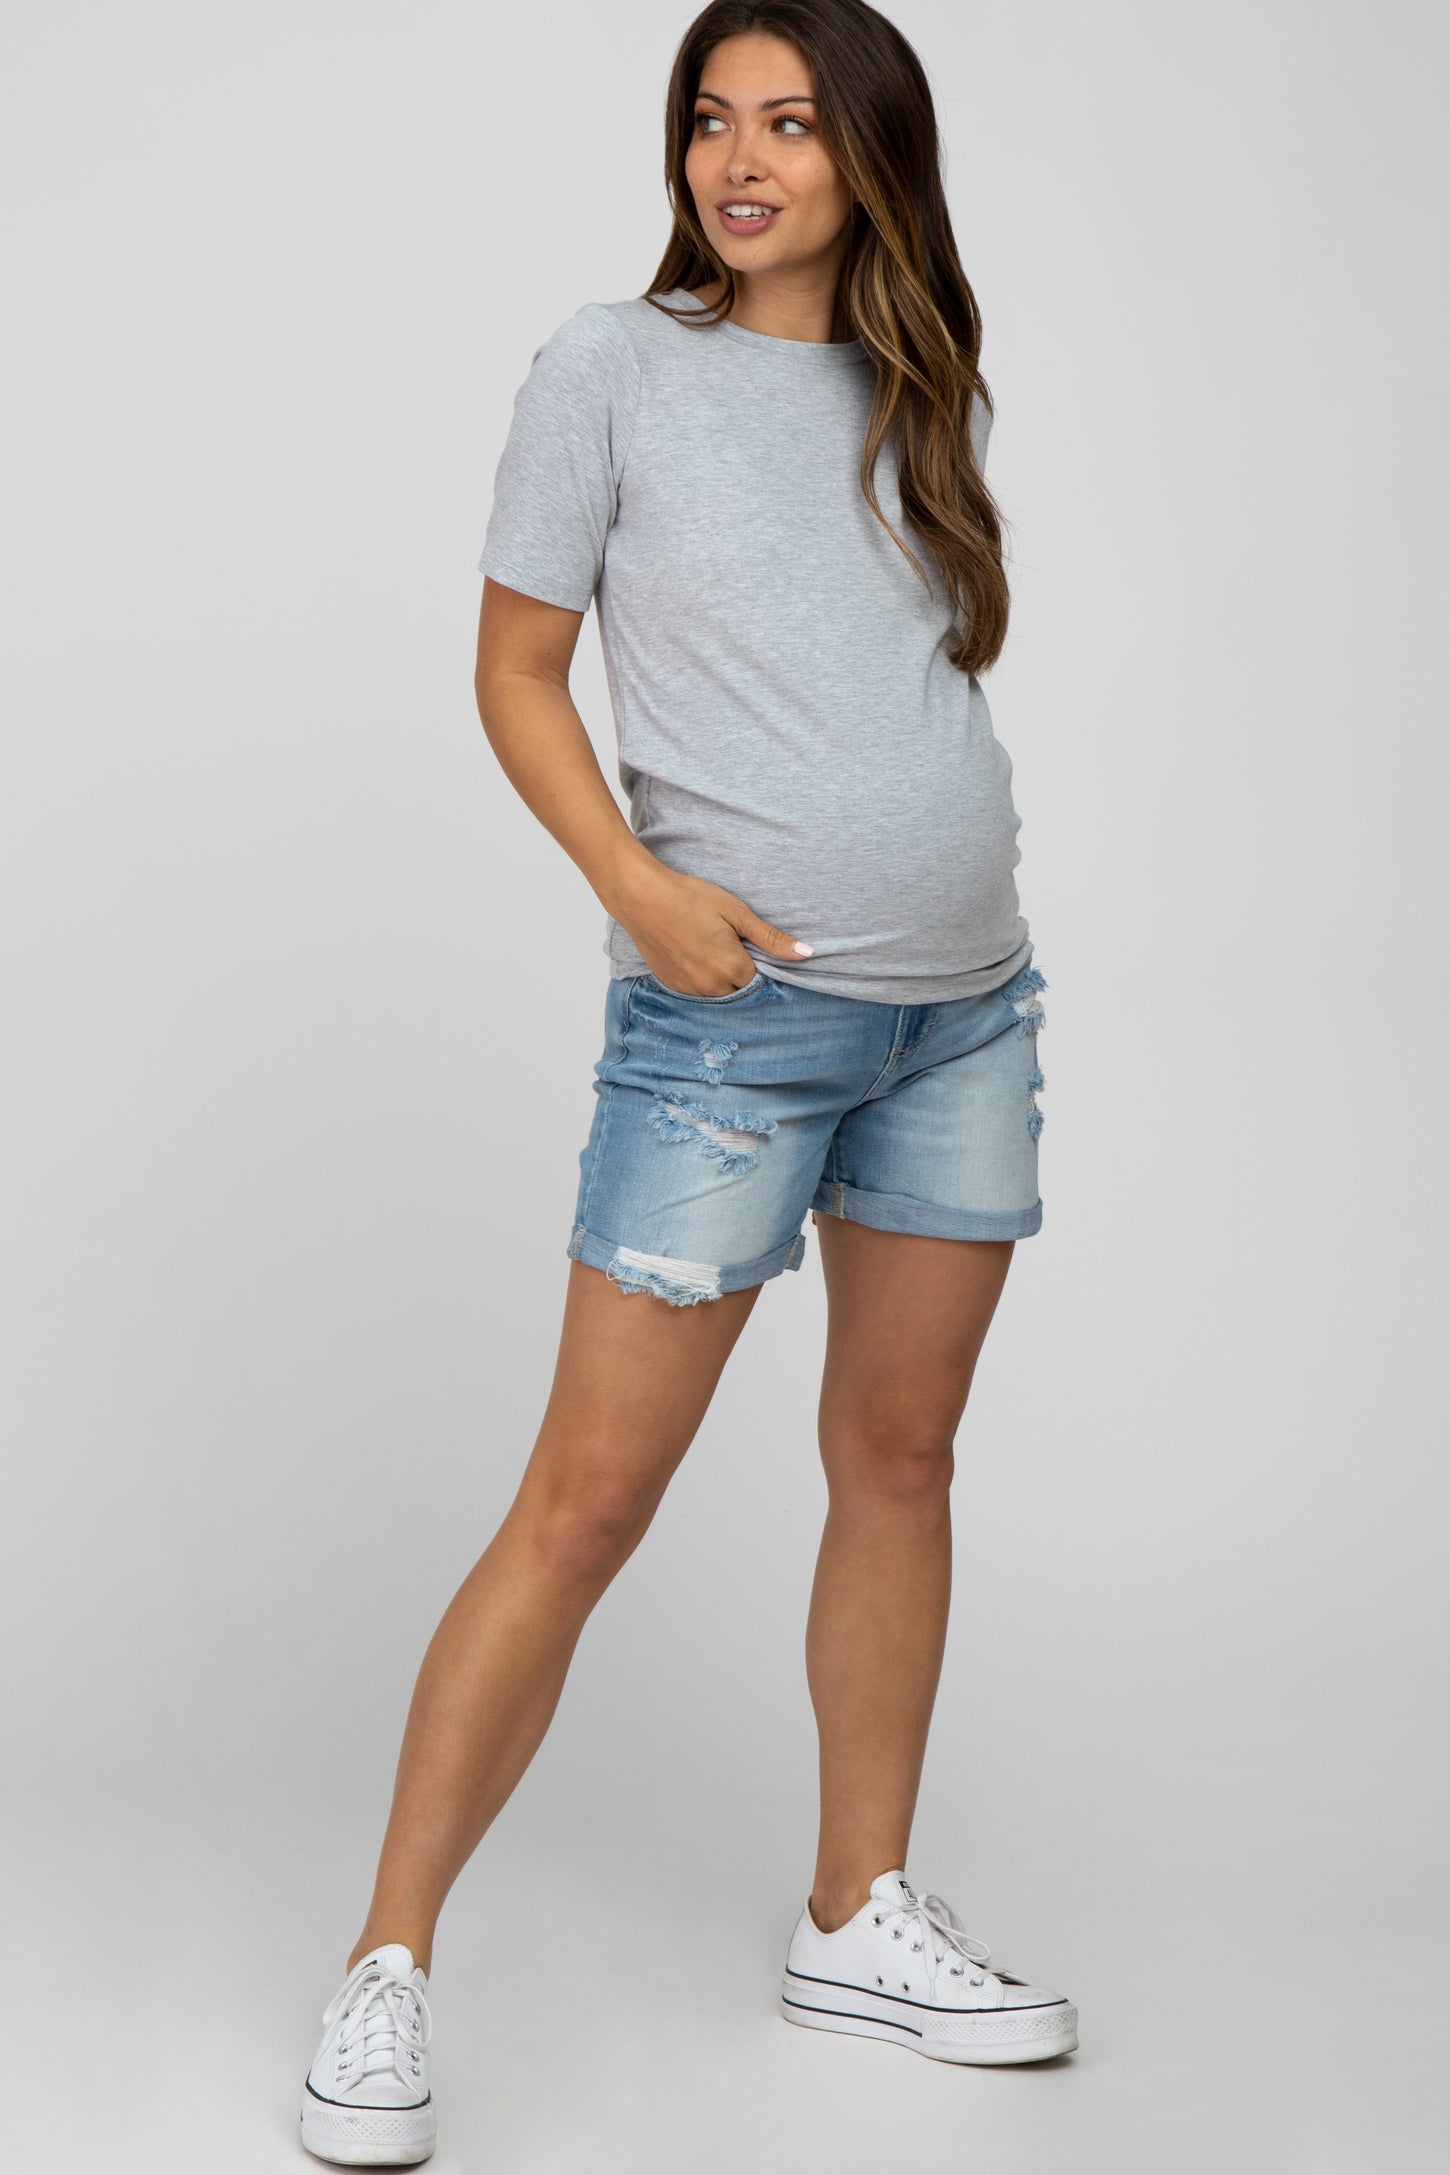 Ripped Maternity Denim Shorts Pregnancy Short Pants – Glamix Maternity